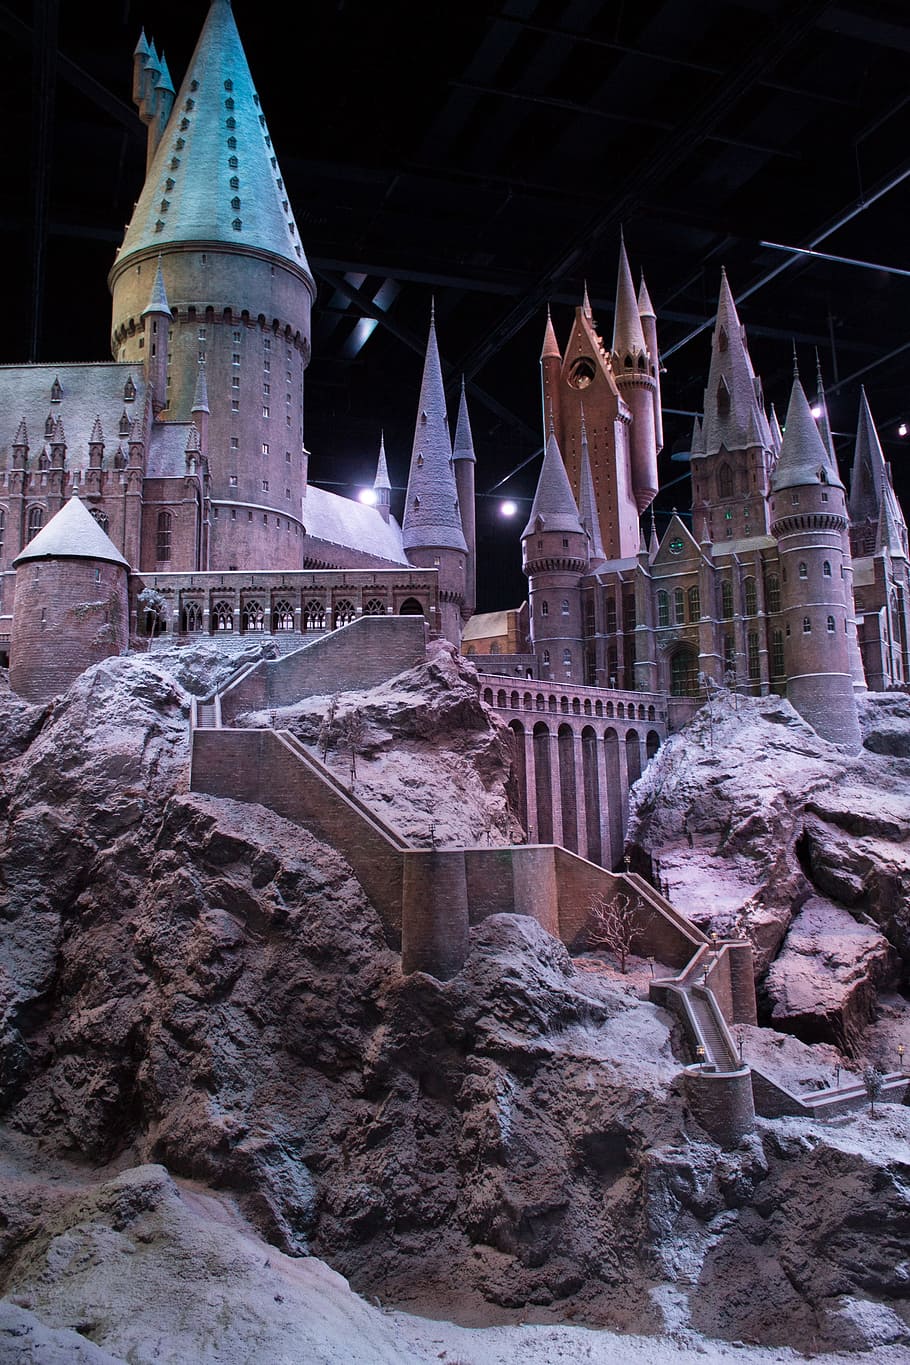 Harry Potter, Hogwarts, Studio, London, architecture, night, famous Place, winter, castle, tower